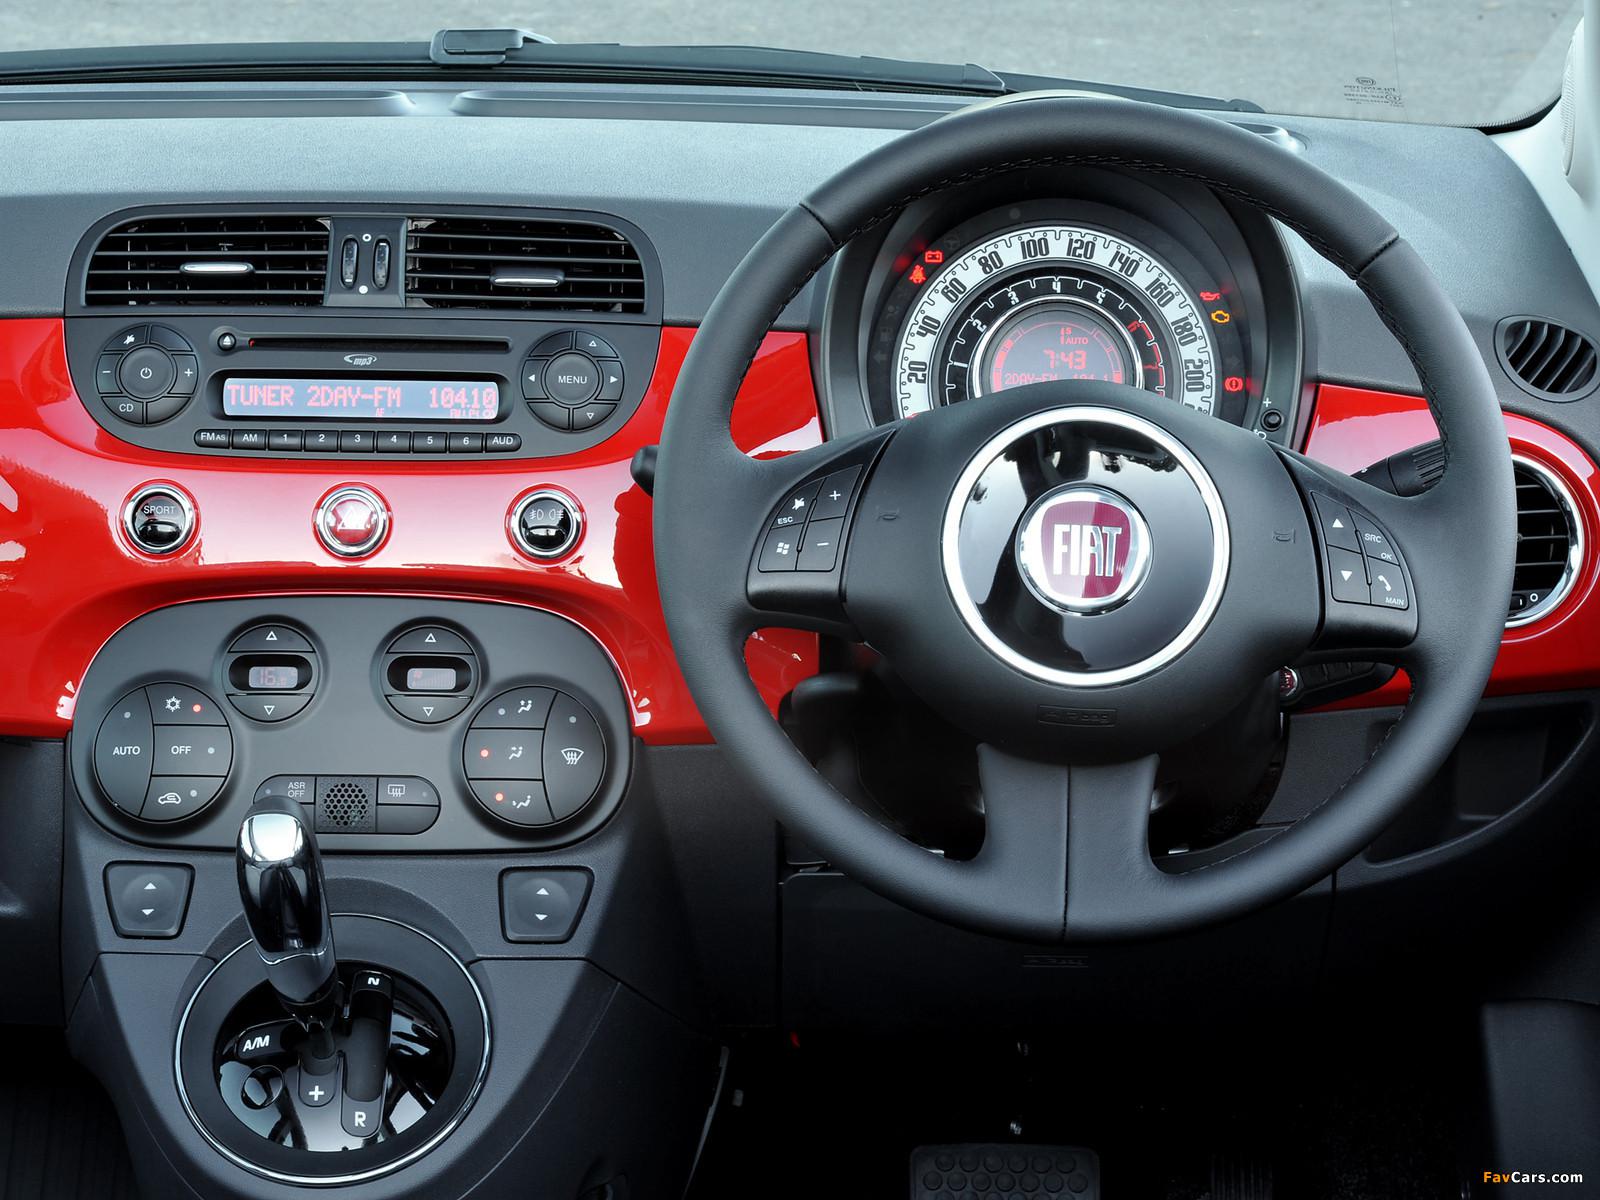 Interior Fiat 500 (favcars.com)